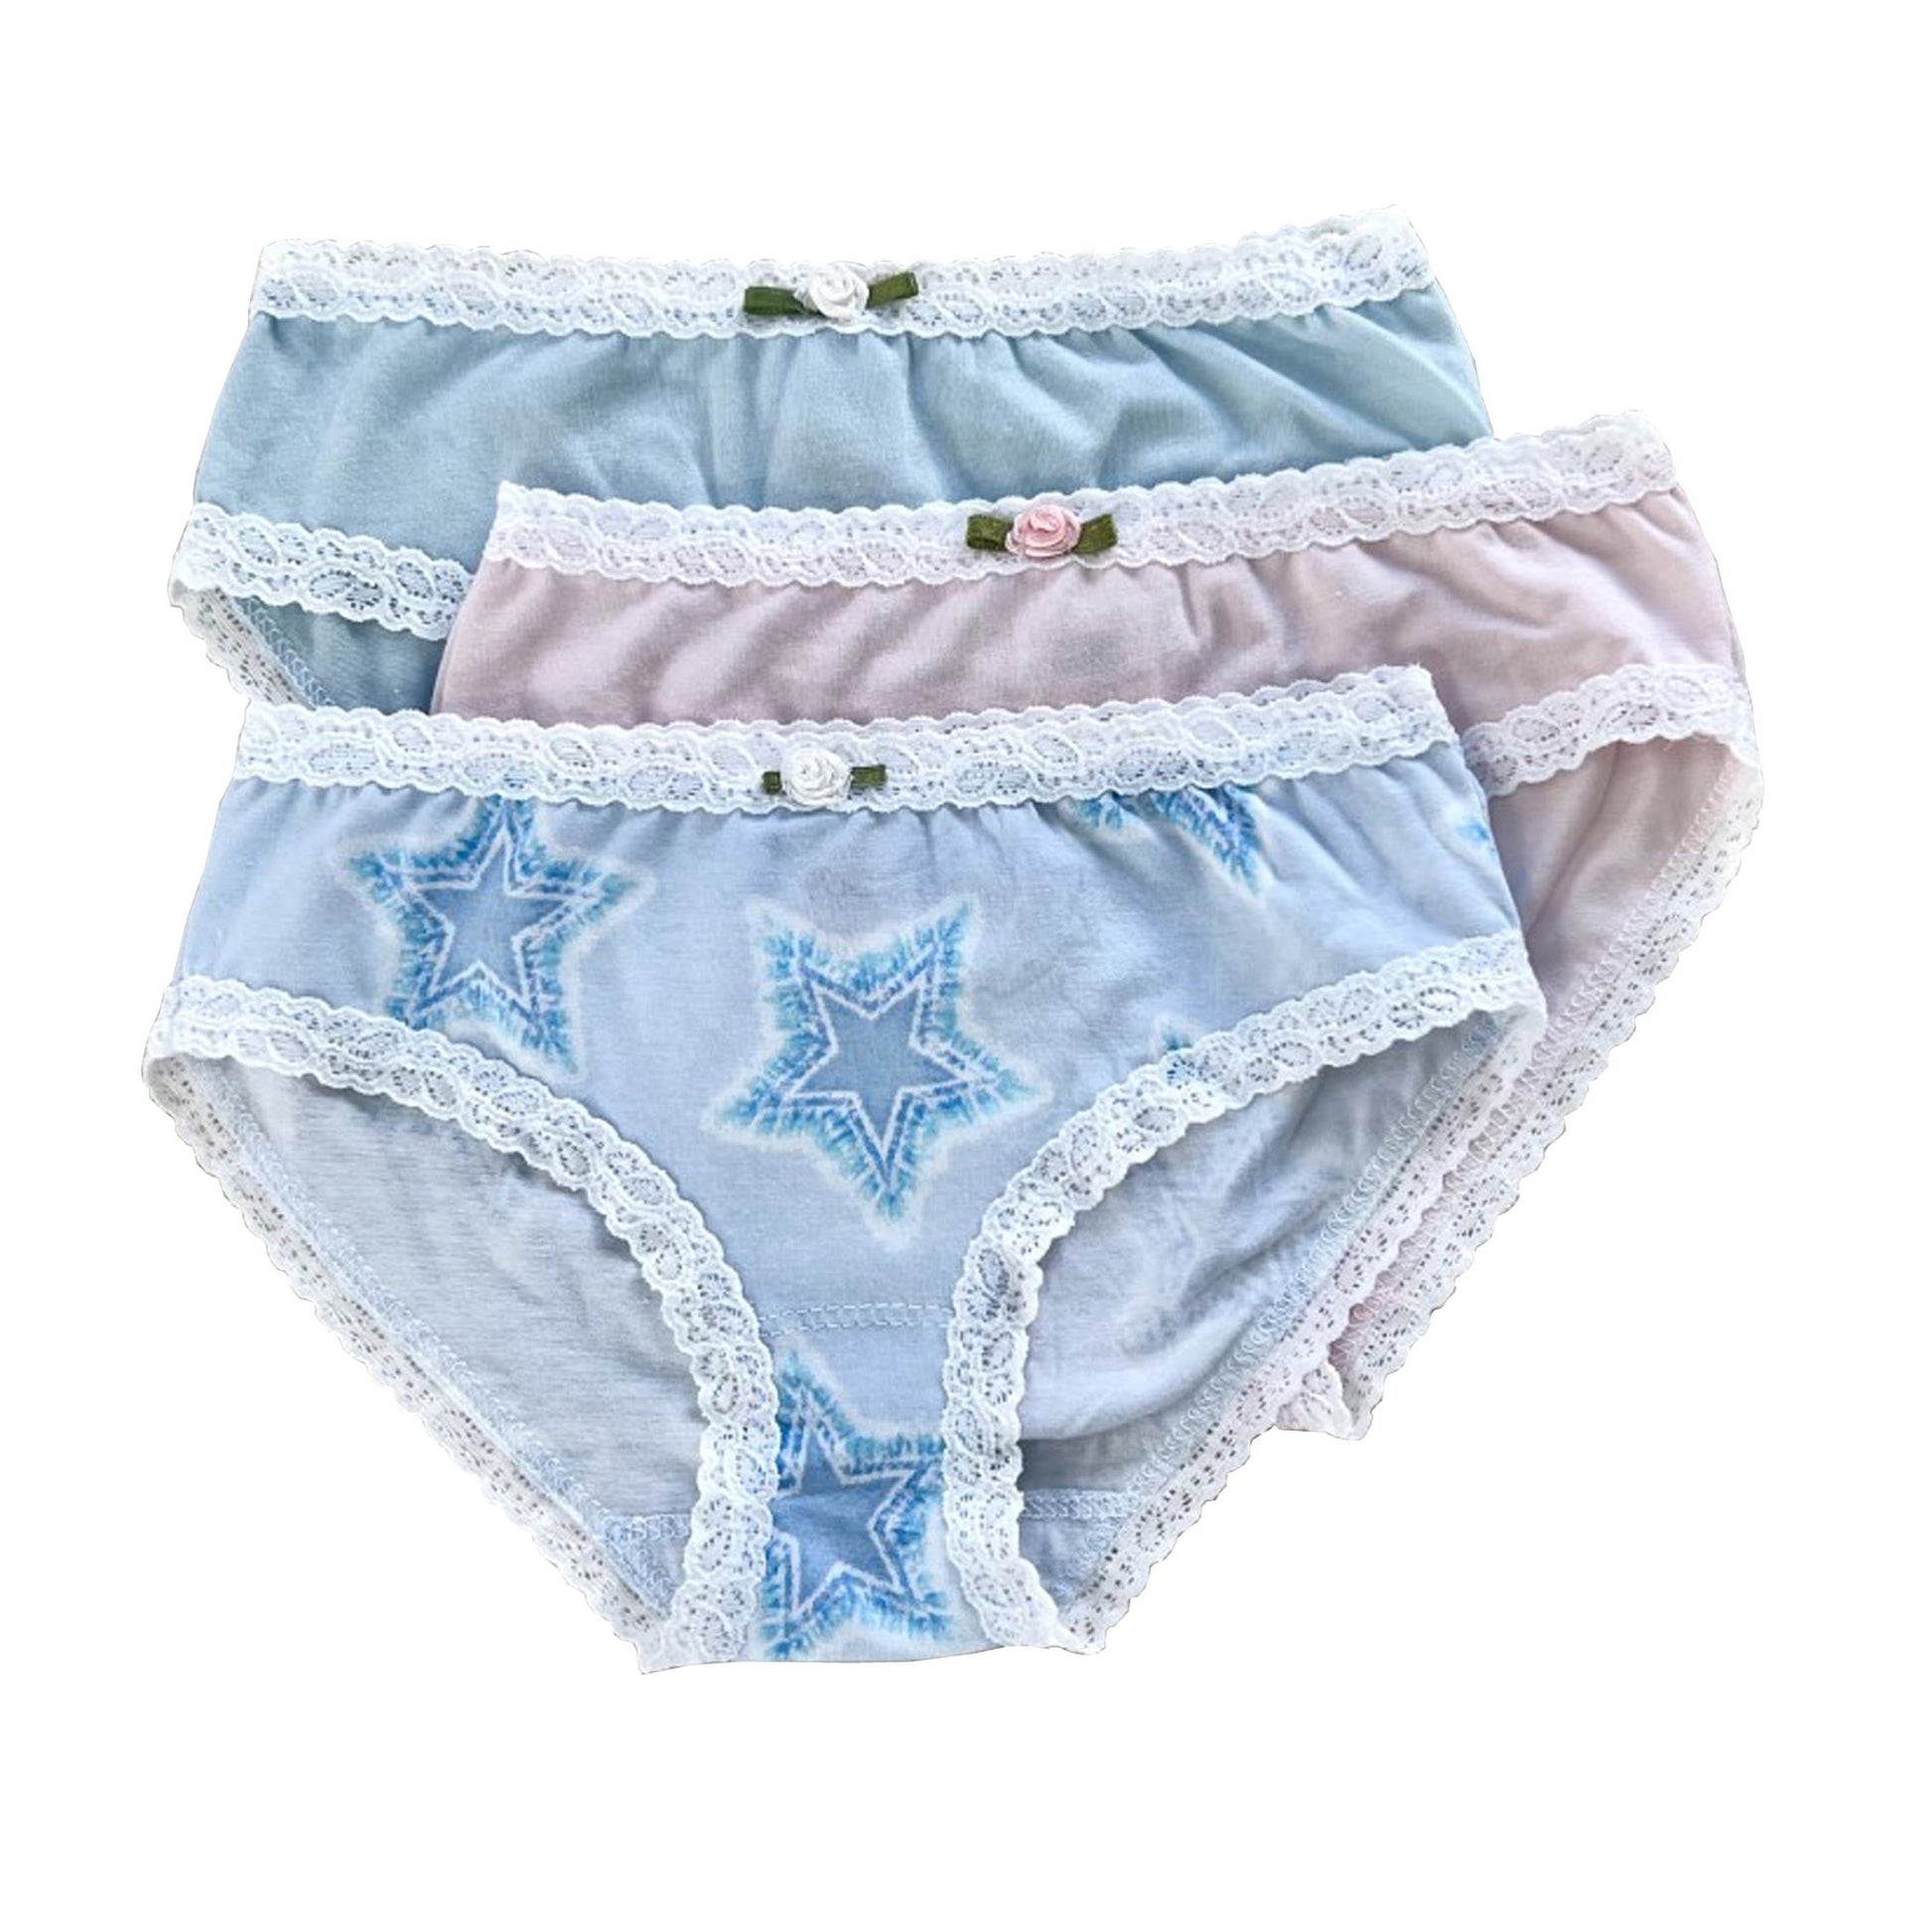 U20 Esme Girls Comfortable Underwear XS S M L XL PT 6 8 10 12 14 panty in  Solid 